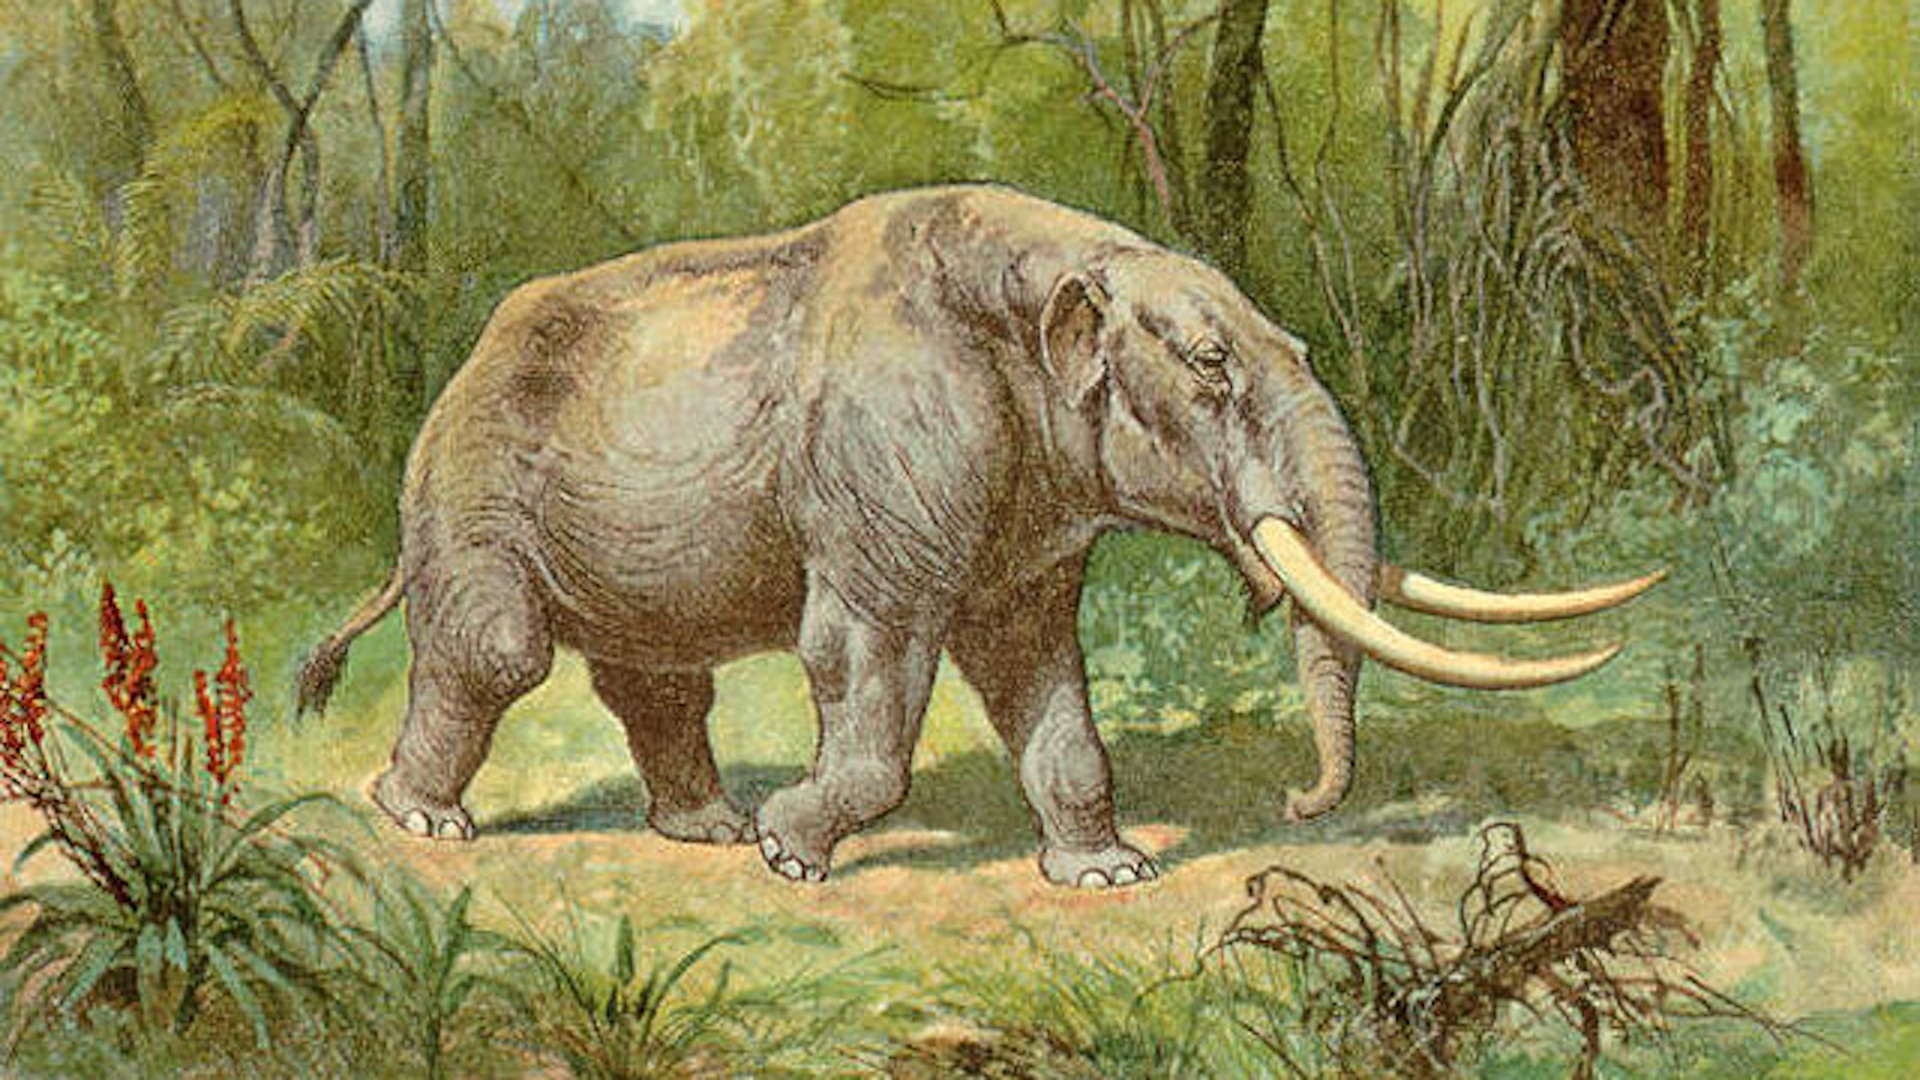 Illustration of a mastodon from the 19th century